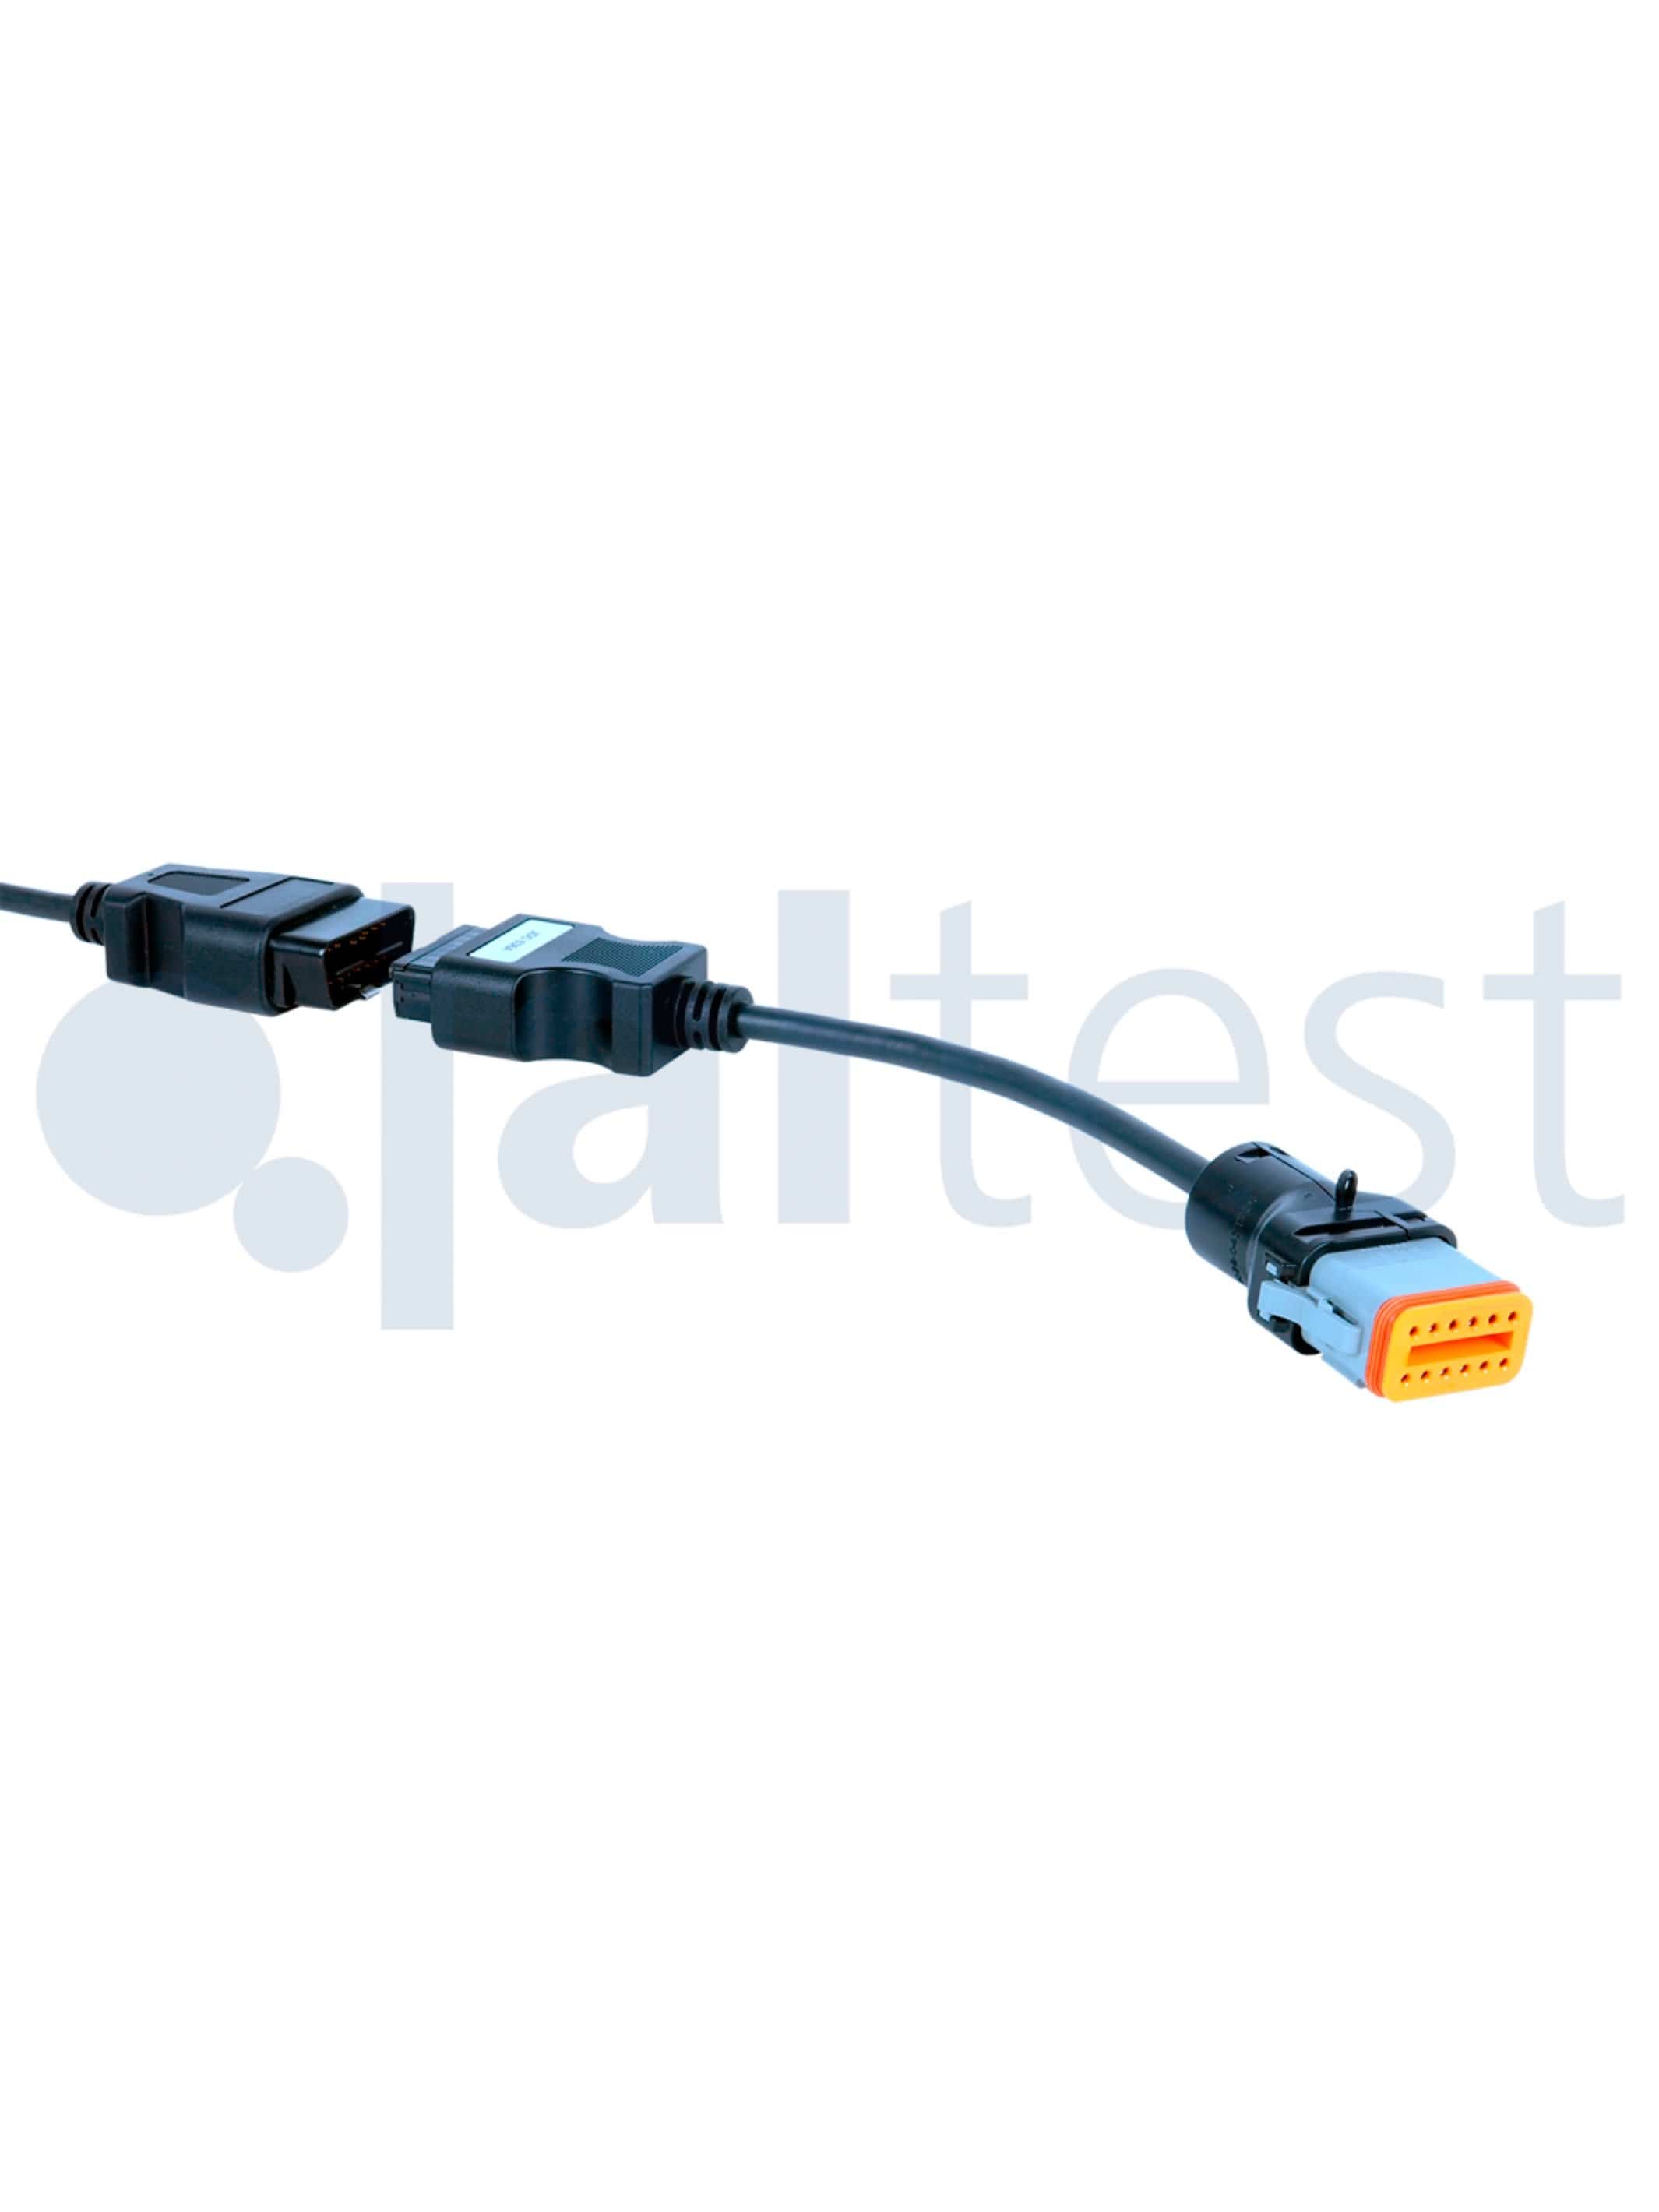 JDC536A Cojali Jaltest Komatsu Diagnostic Cable - Jaltest Construction & Off Highway Equipment Diagnostic Cable Kit